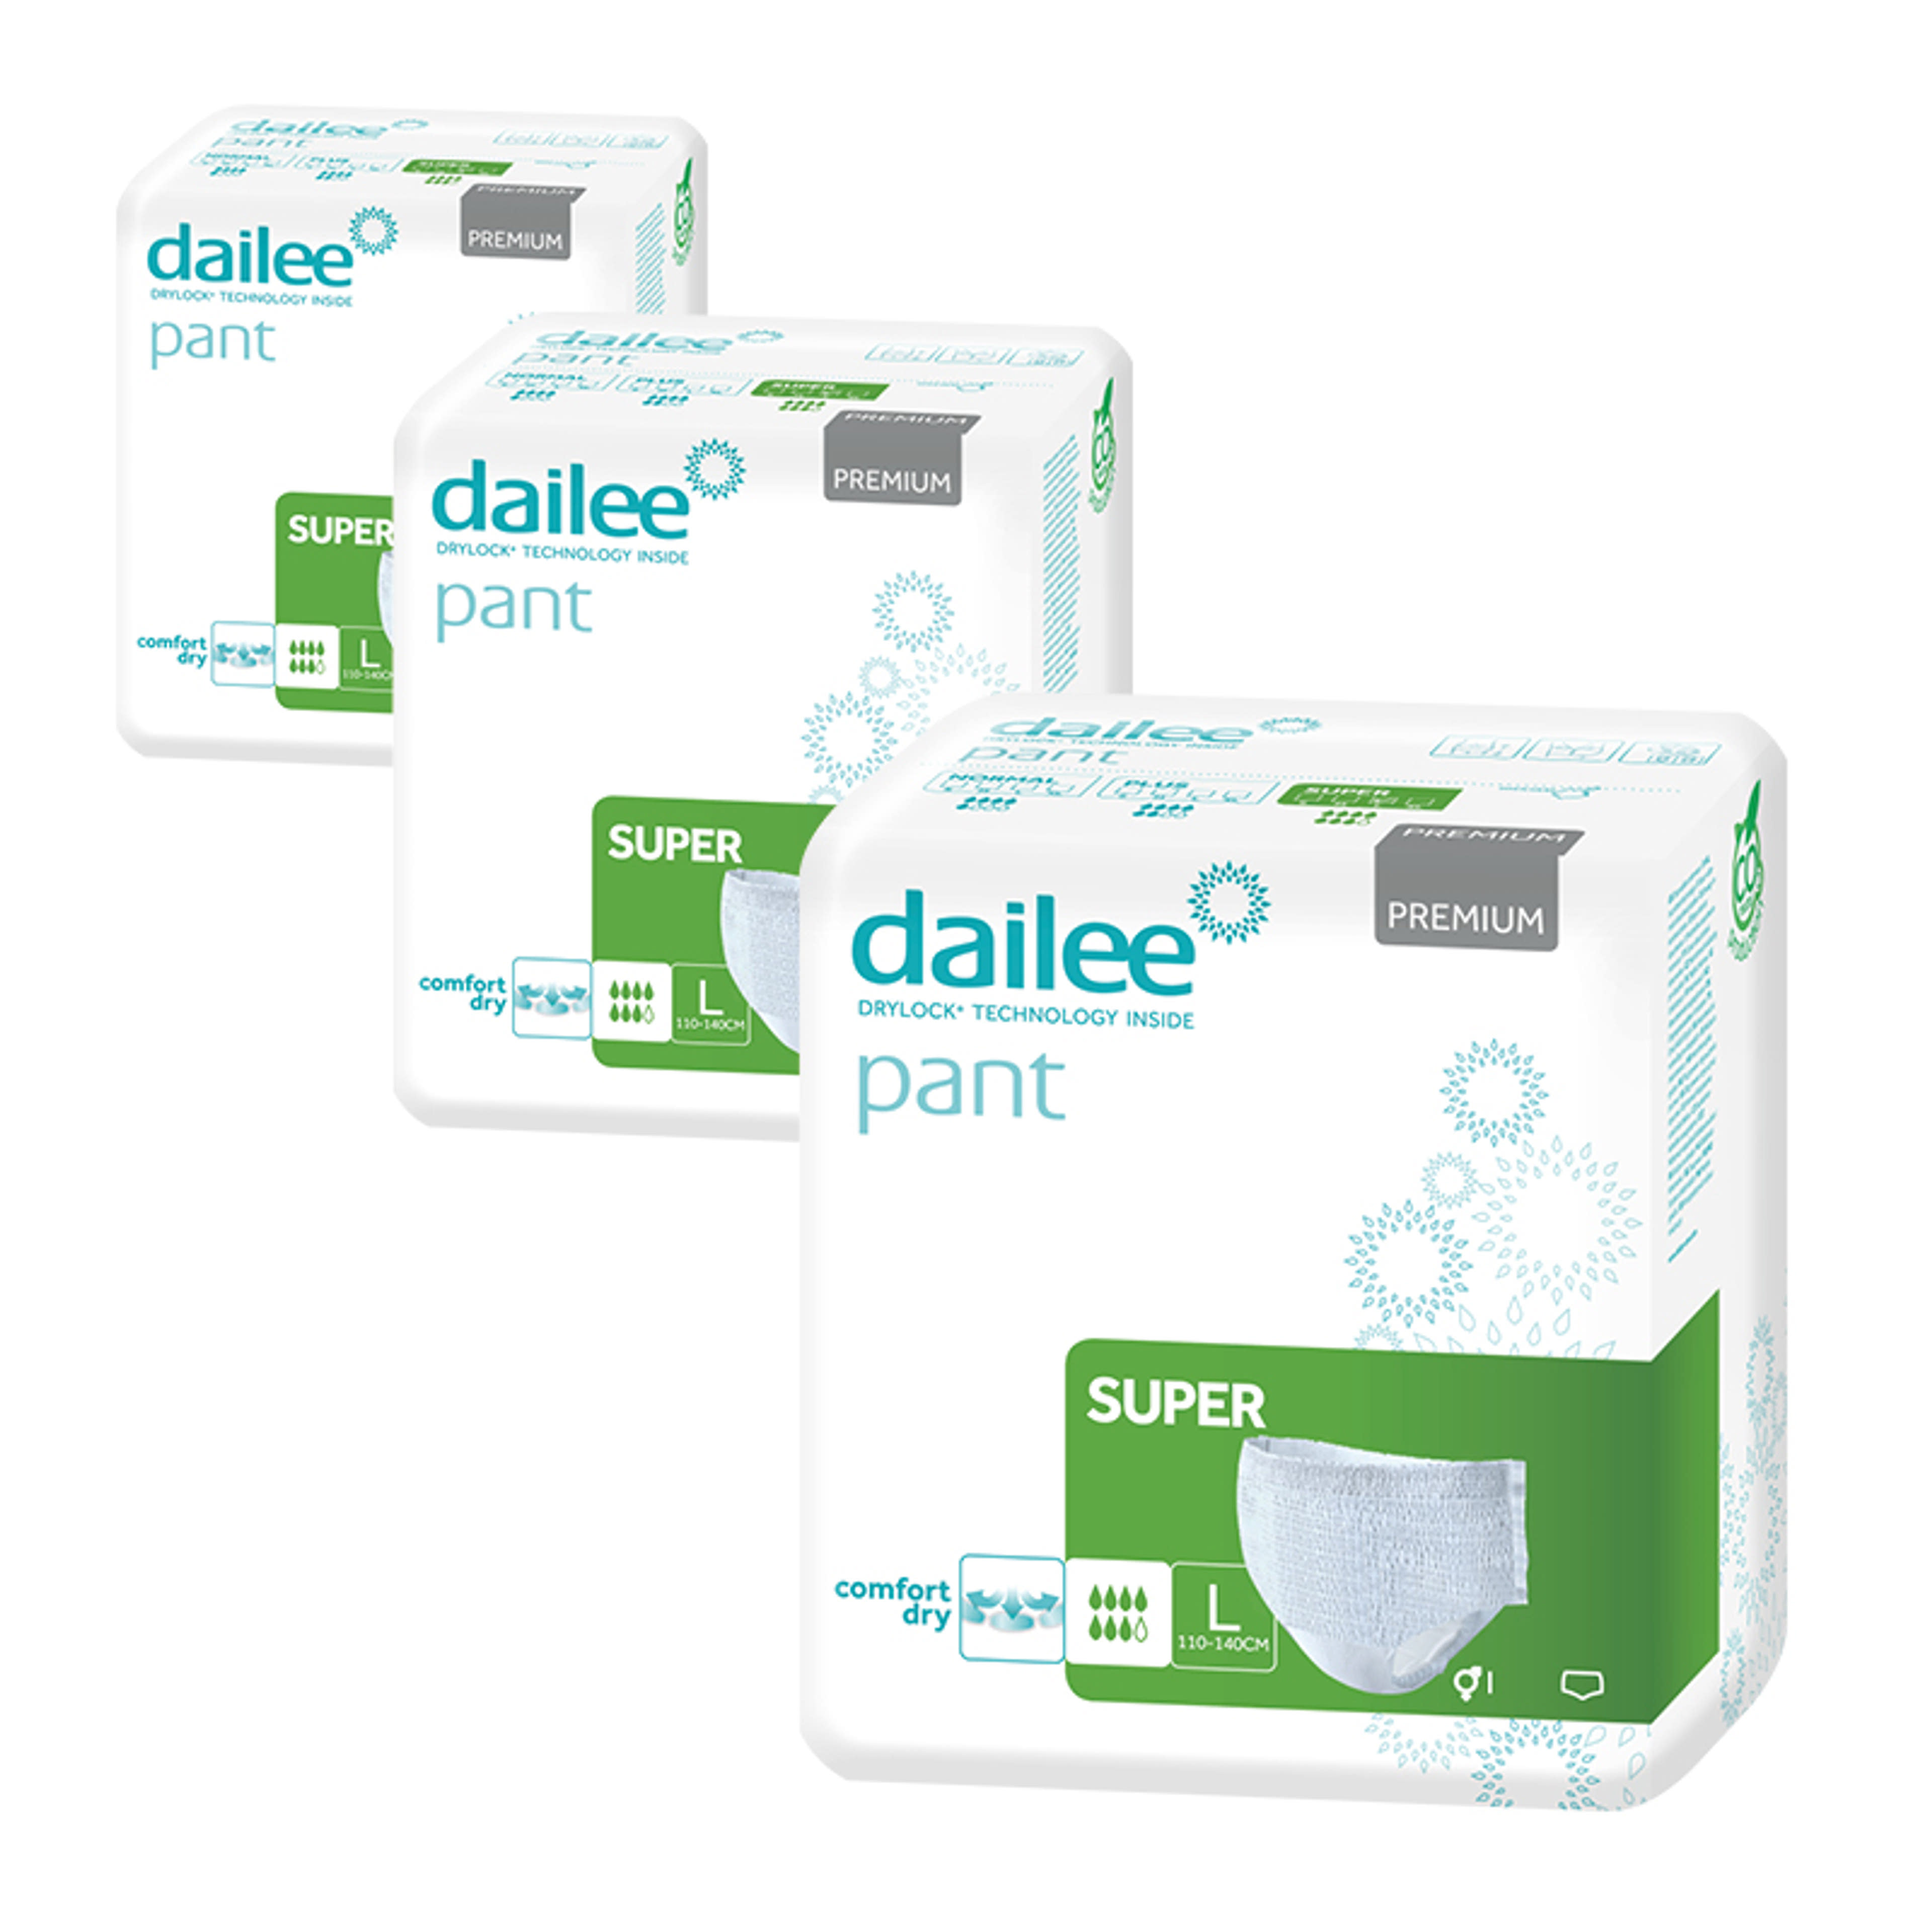 Dailee Pant Premium Super inkontinencia nadrág csomag L-es méret